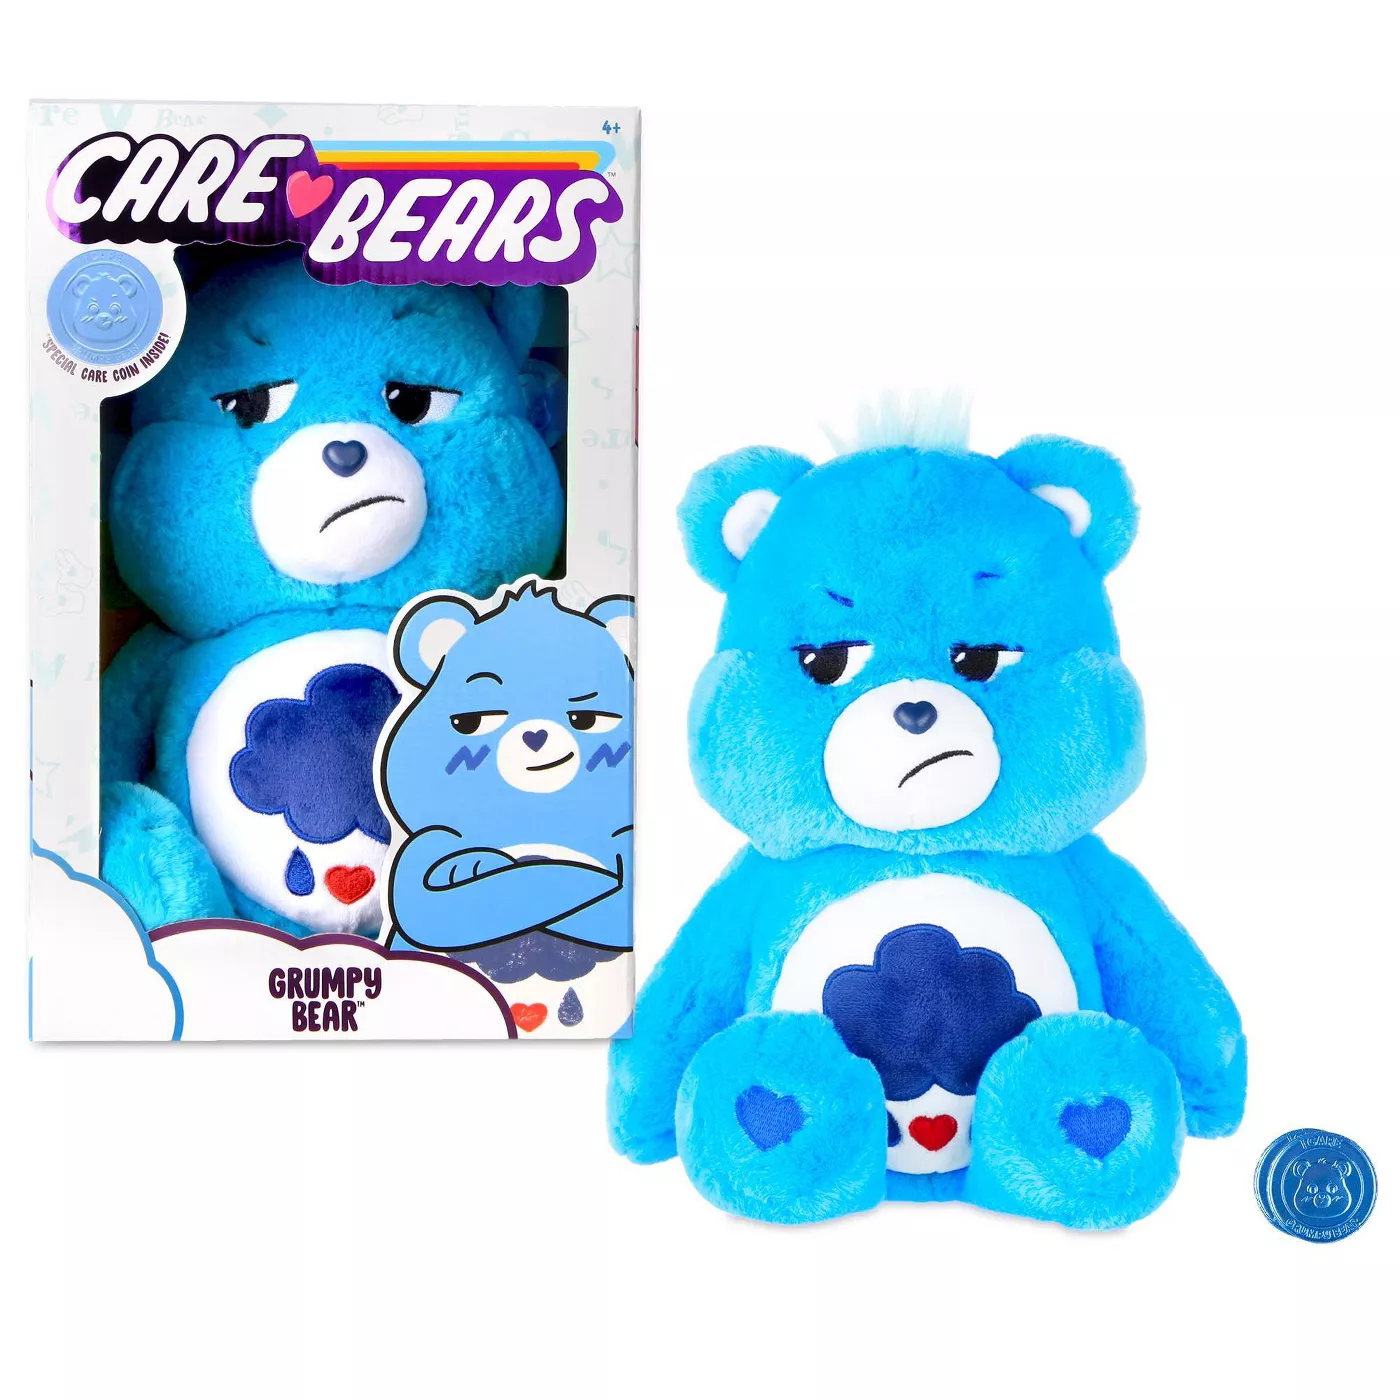 Care Bears Basic Medium Plush - Grumpy Bear - image 1 of 15